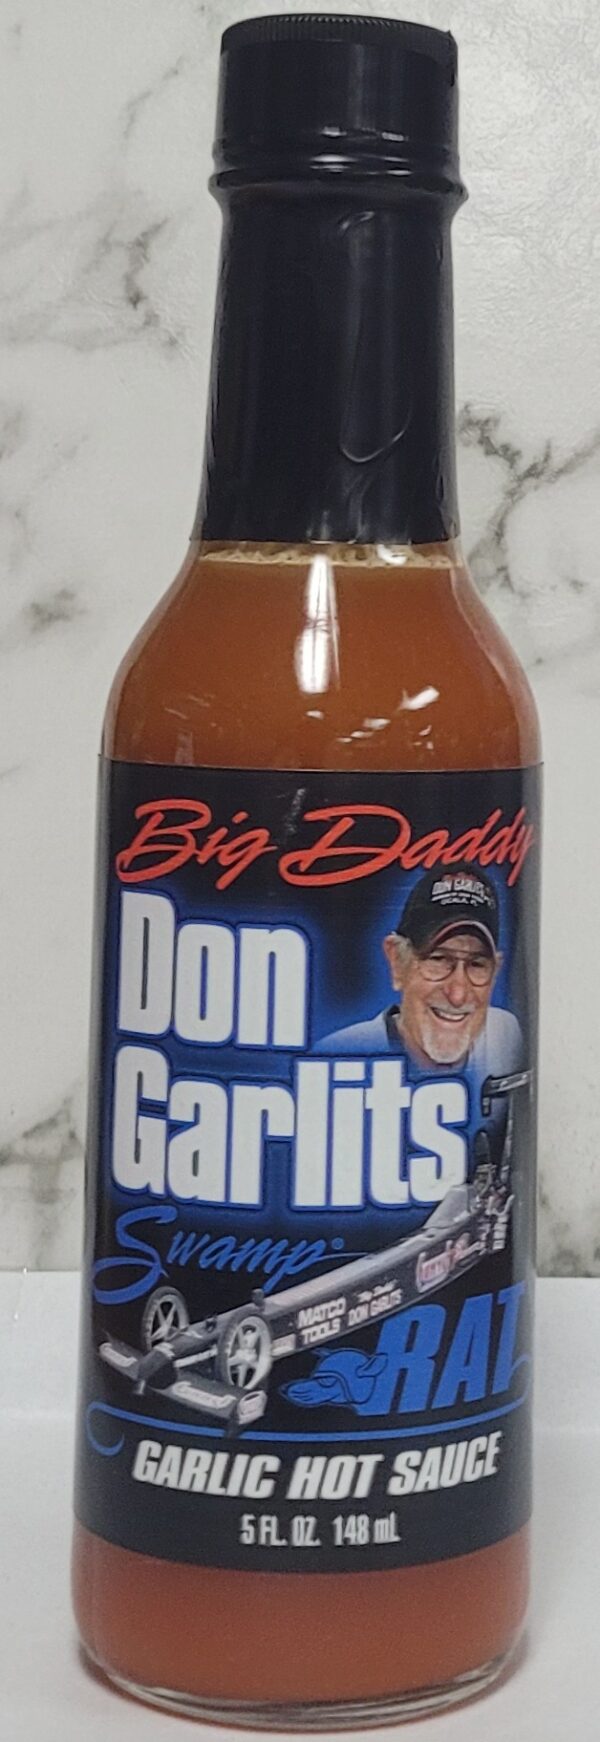 Big Daddy Garlic Hot Sauce Bottle